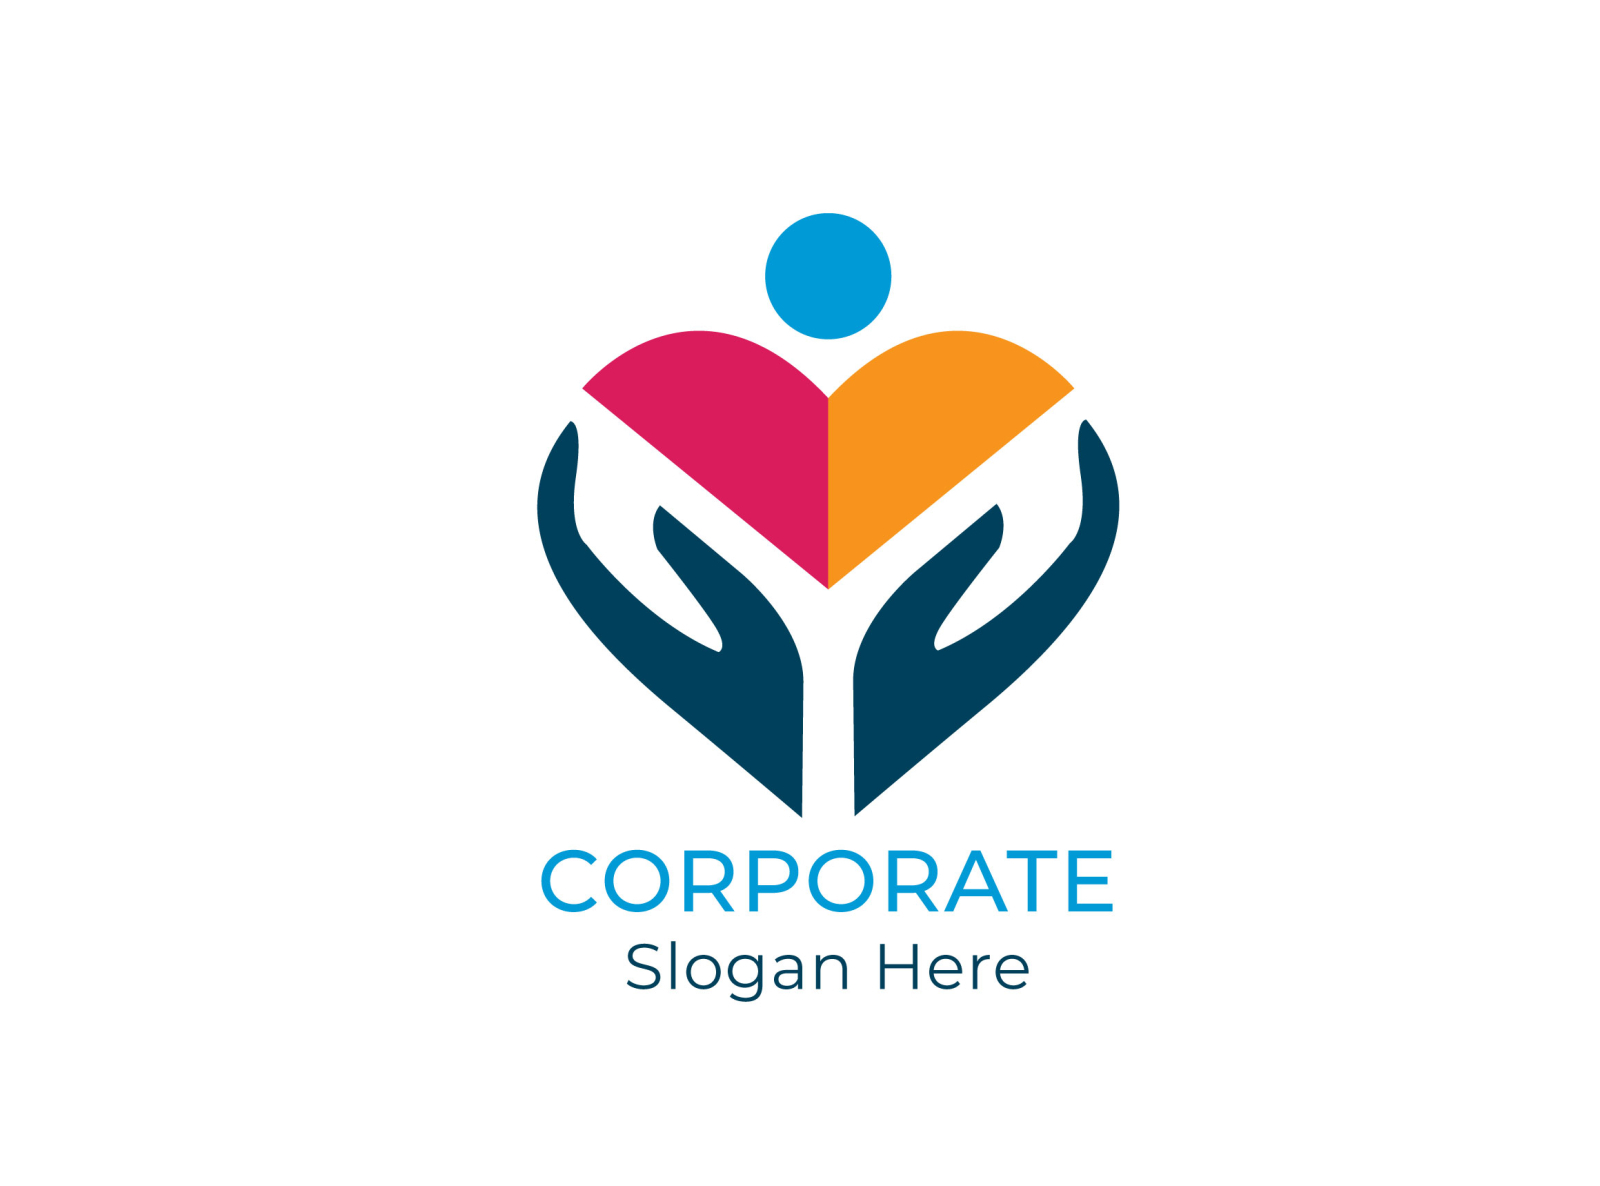 Corporate Logo Design | Logo Design | Business Logos by Design Idea 4u ...